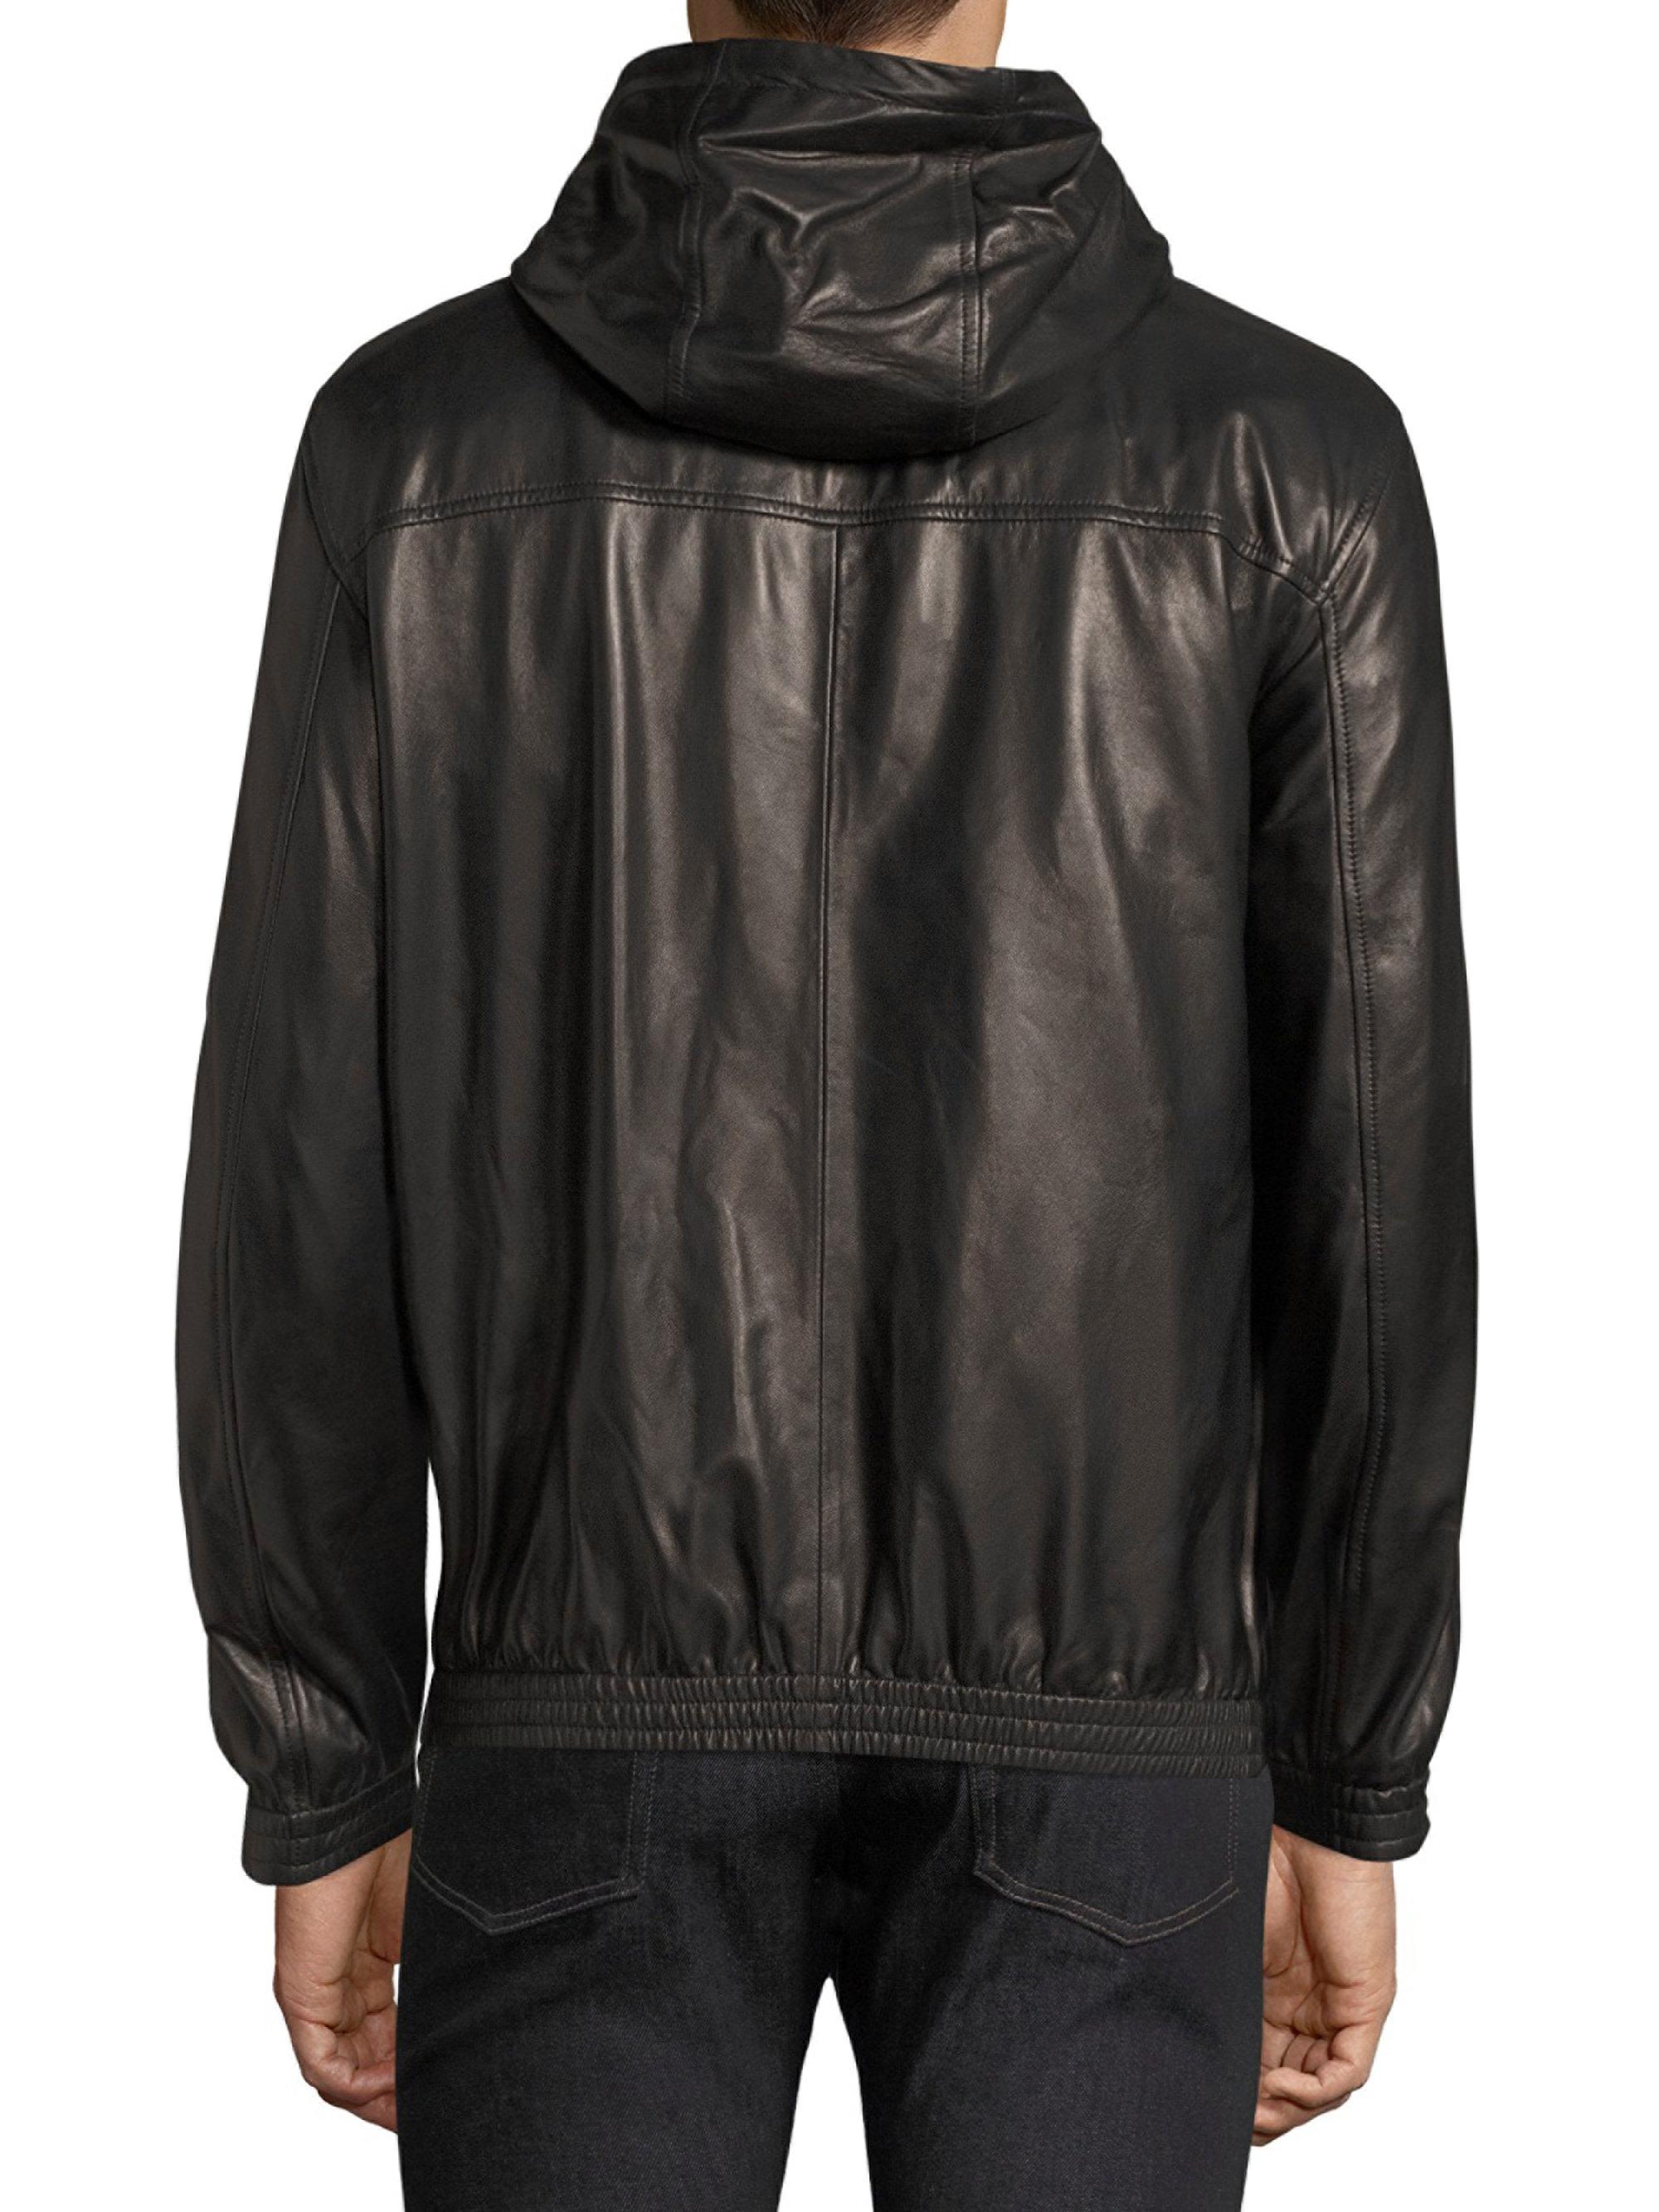 Bally Leather Blouson Jacket in Black for Men - Lyst